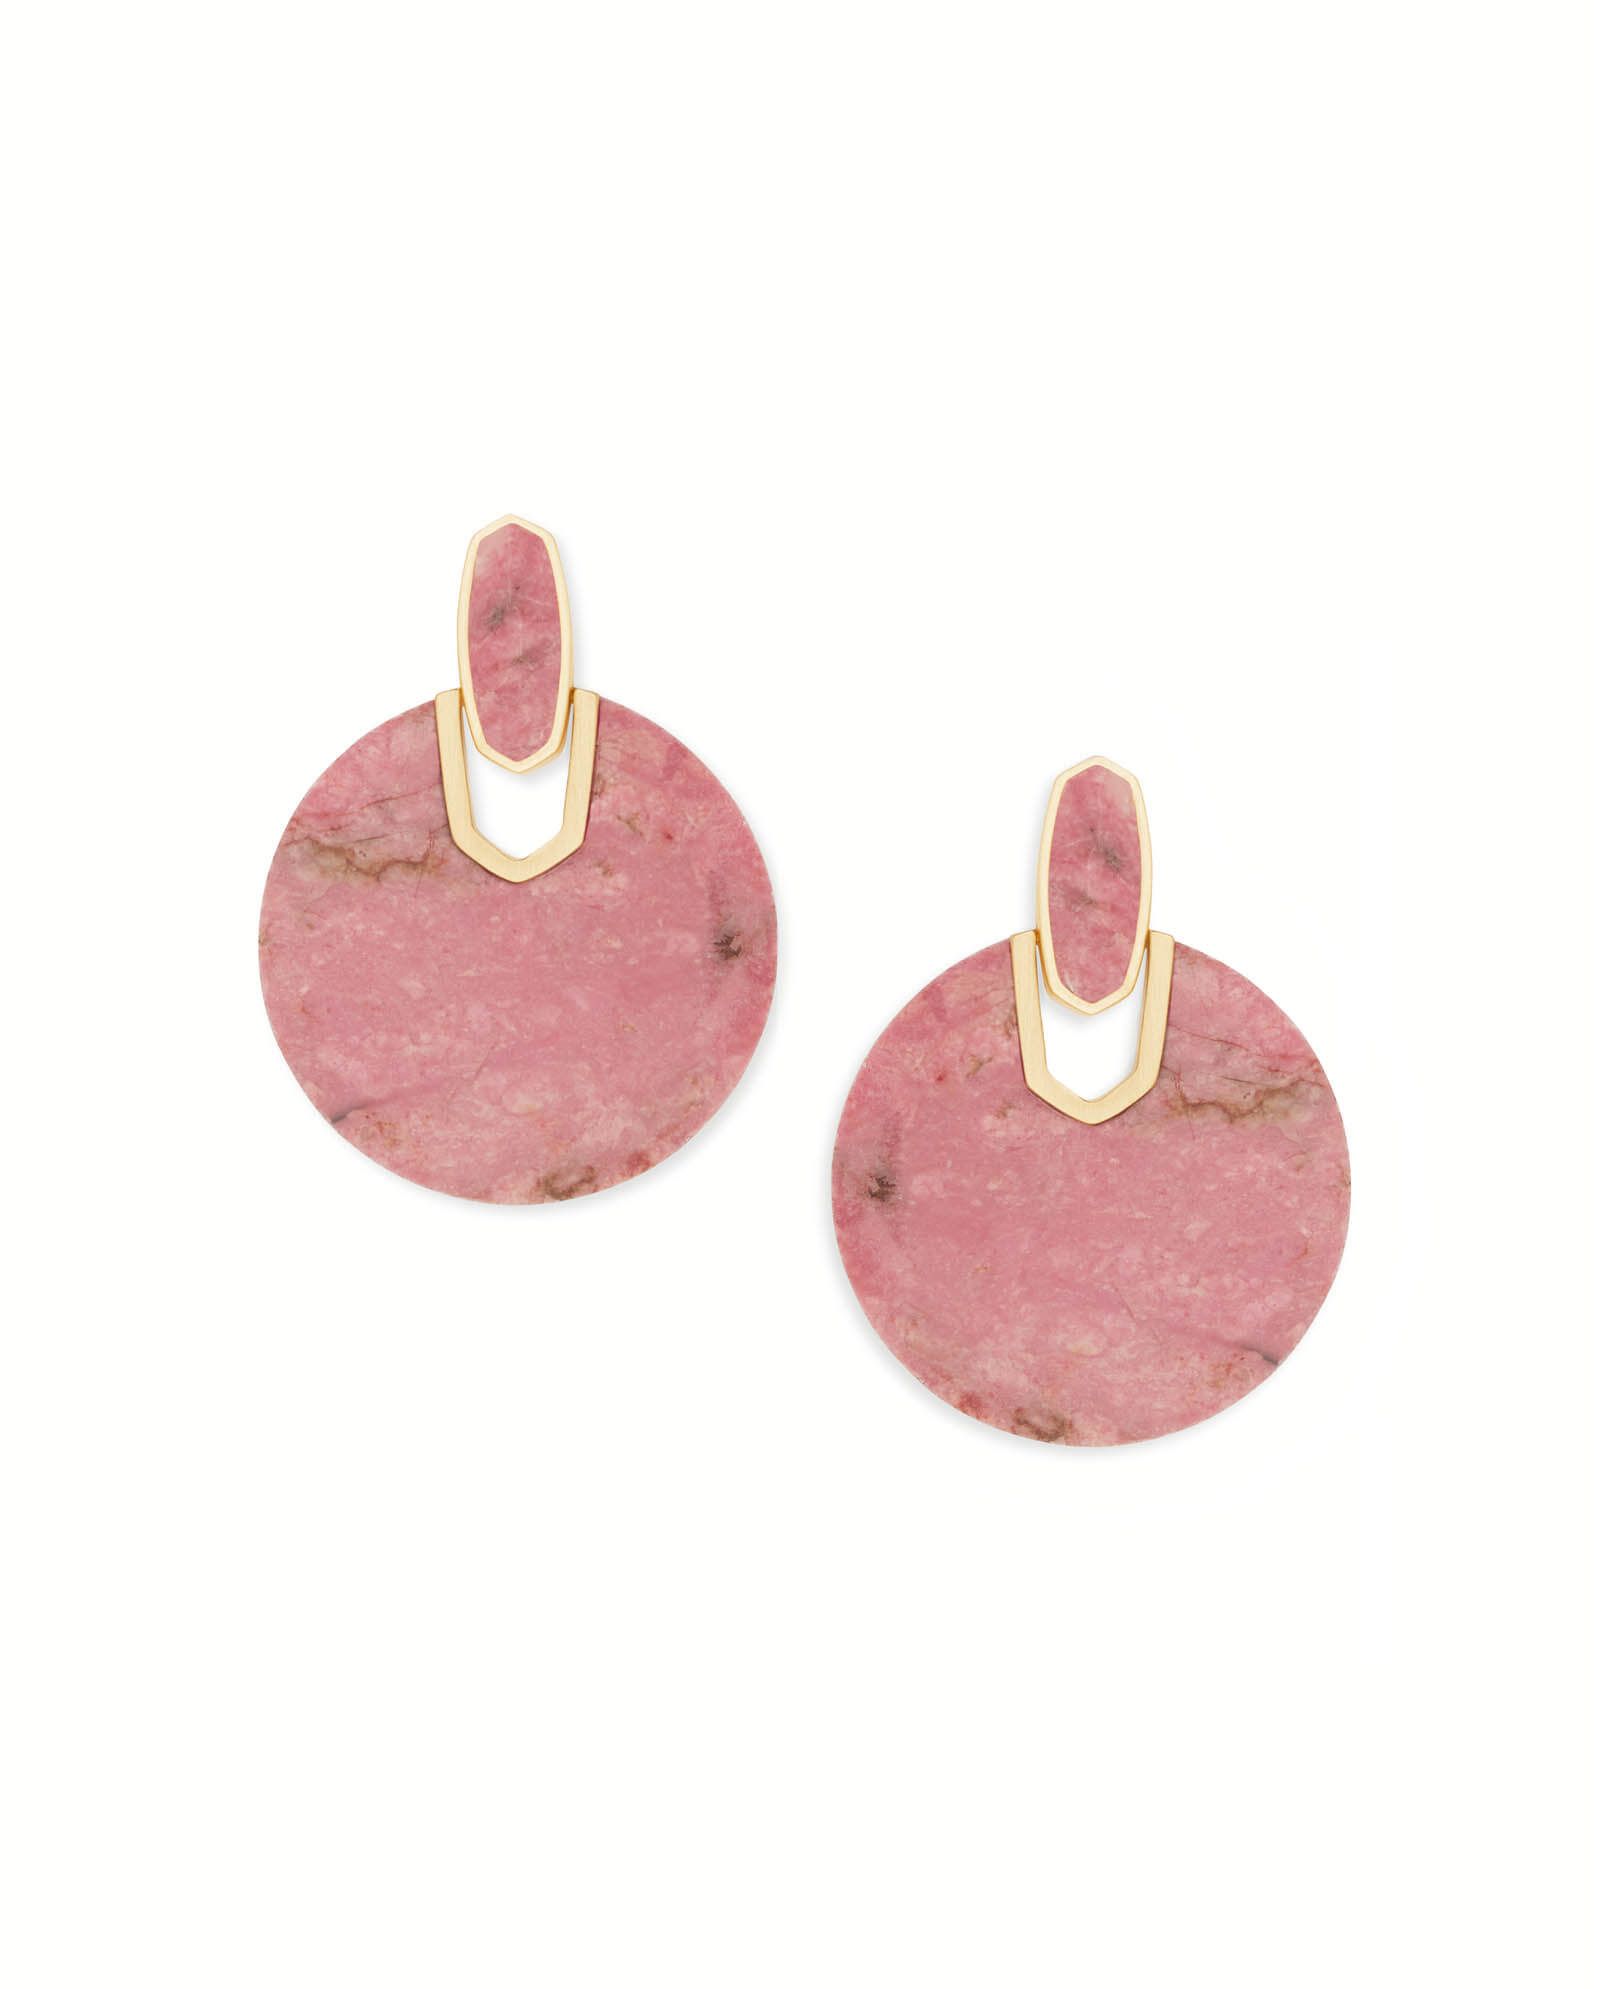 Didi Gold Statement Earrings in Pink Rhodonite | Kendra Scott